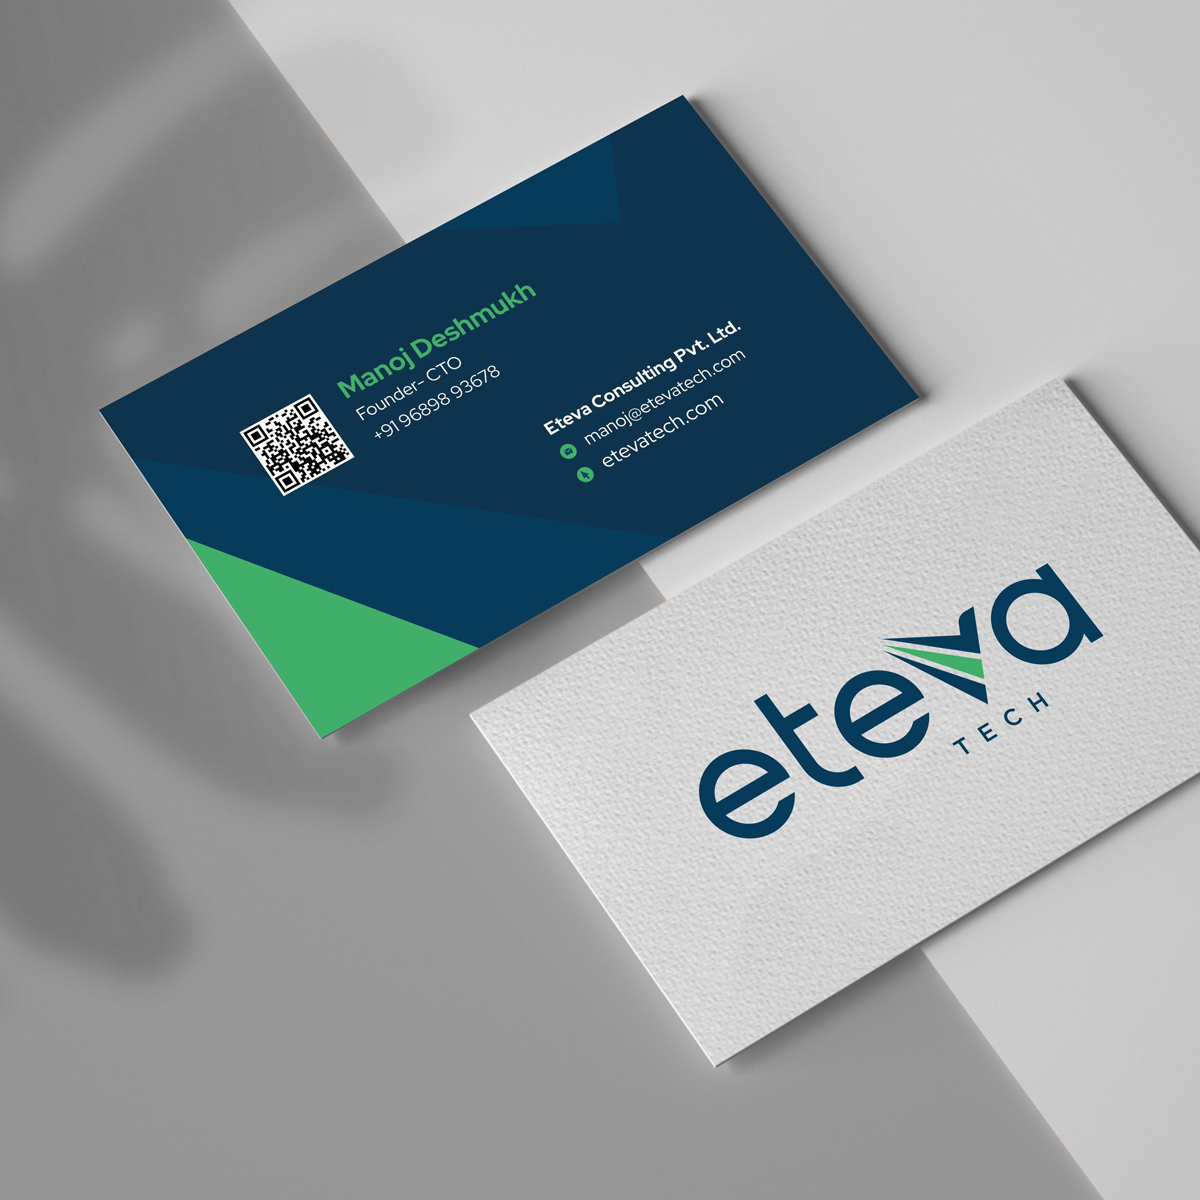 Eteva tech visiting card design